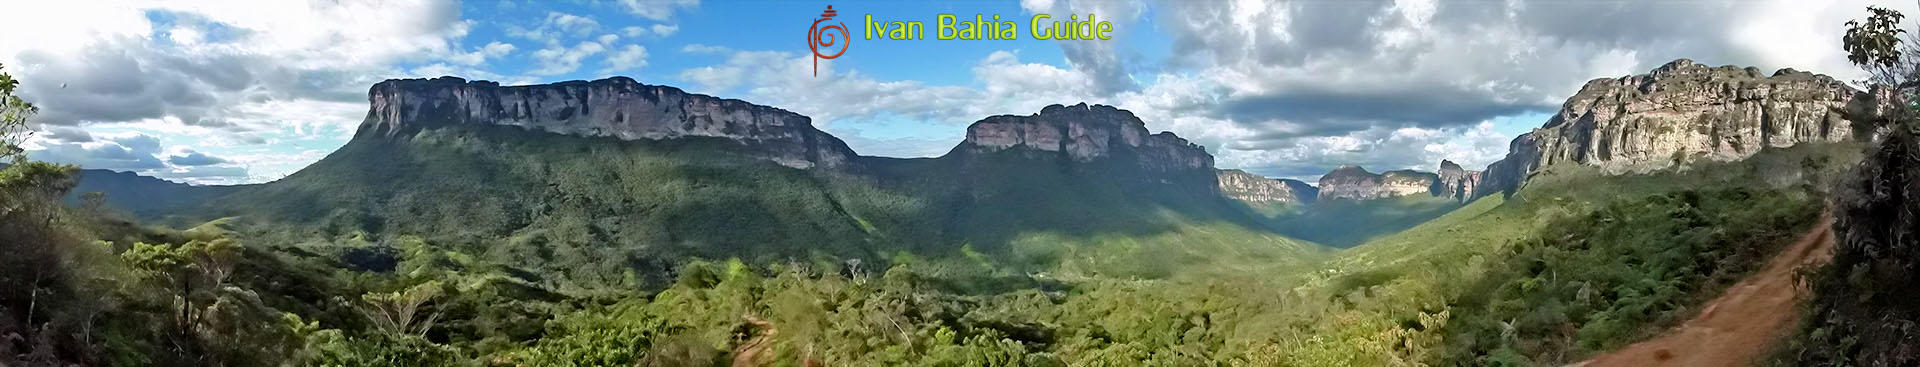 Ivan Bahia tour-guide / hiking in Chapada Diamantina National Park (aka 'the Brazilian Grand Canyon') mountain views while hiking hashtag : #ChapadaDiamantinaGuide #ChapadaDiamantina #ChapadaDiamantinaTrekking #BahiaMetisse #ToursByLocals #fernandobingretourguide #IBG #FotosBahia #DiamantinaMountains #IvanBahiaReizen #IvanChapadaDiamantinaGuide #ValeDoPati #PatiValey #ValeDoCapao #Trajano #Zentur #chapadatrekking #TrilhasDiamantina #morodopaiinacio #lencois #poçoazul #ecoturismo 